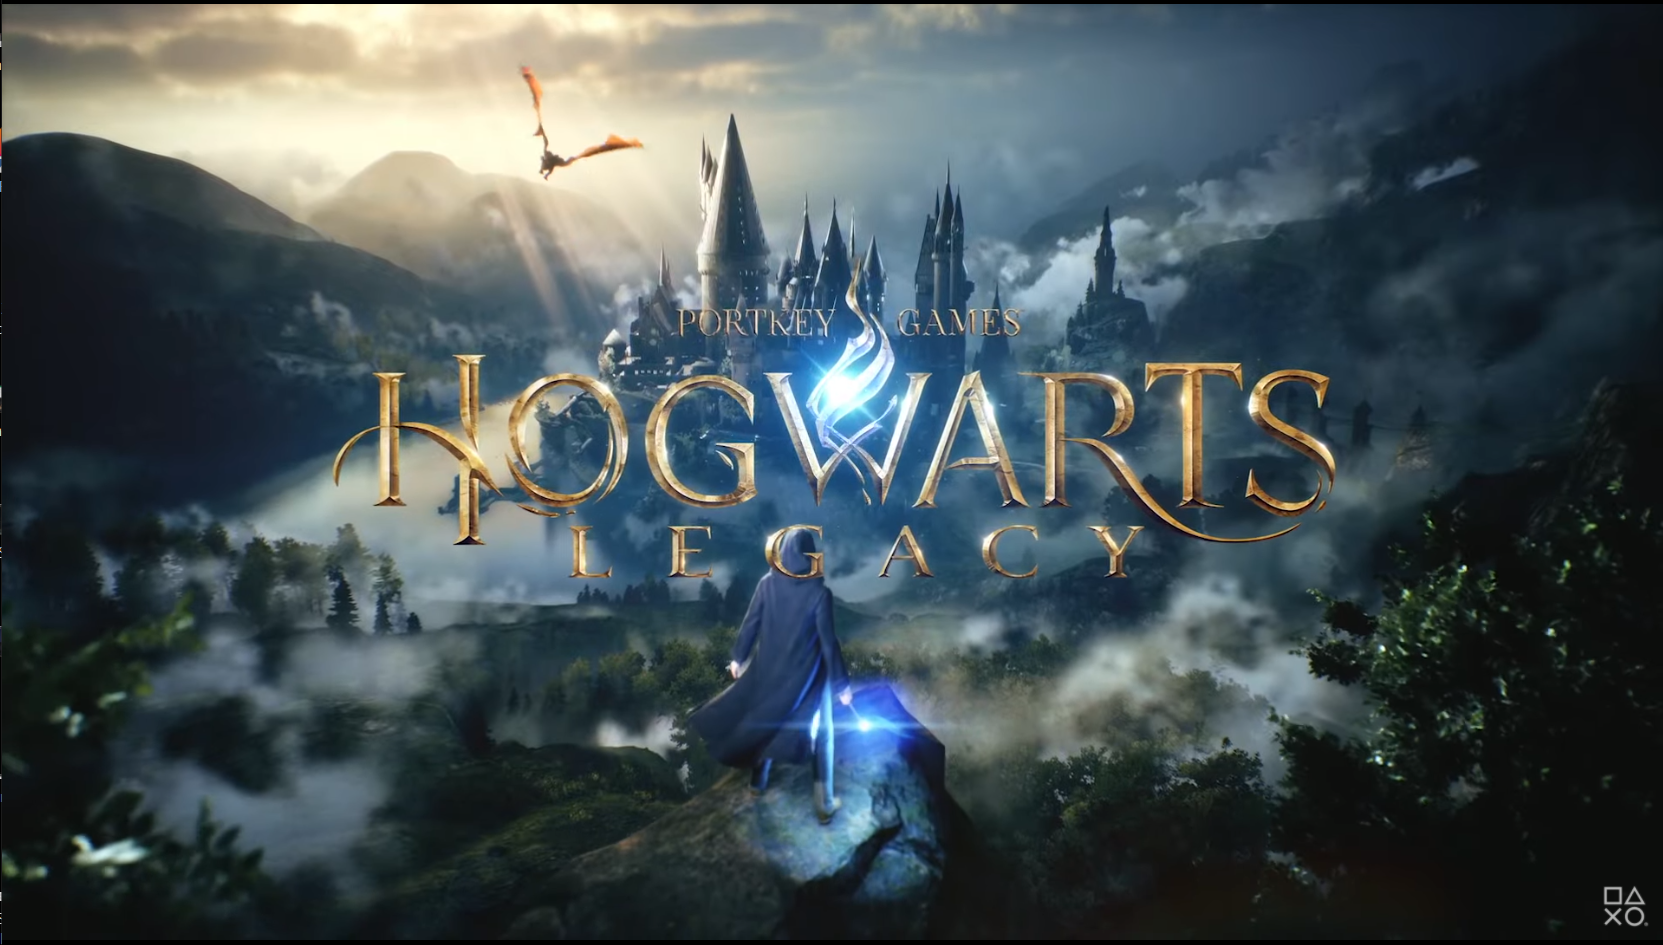 Hogwarts Legacy is the Harry Potter PS5 game casting spells on nextgen